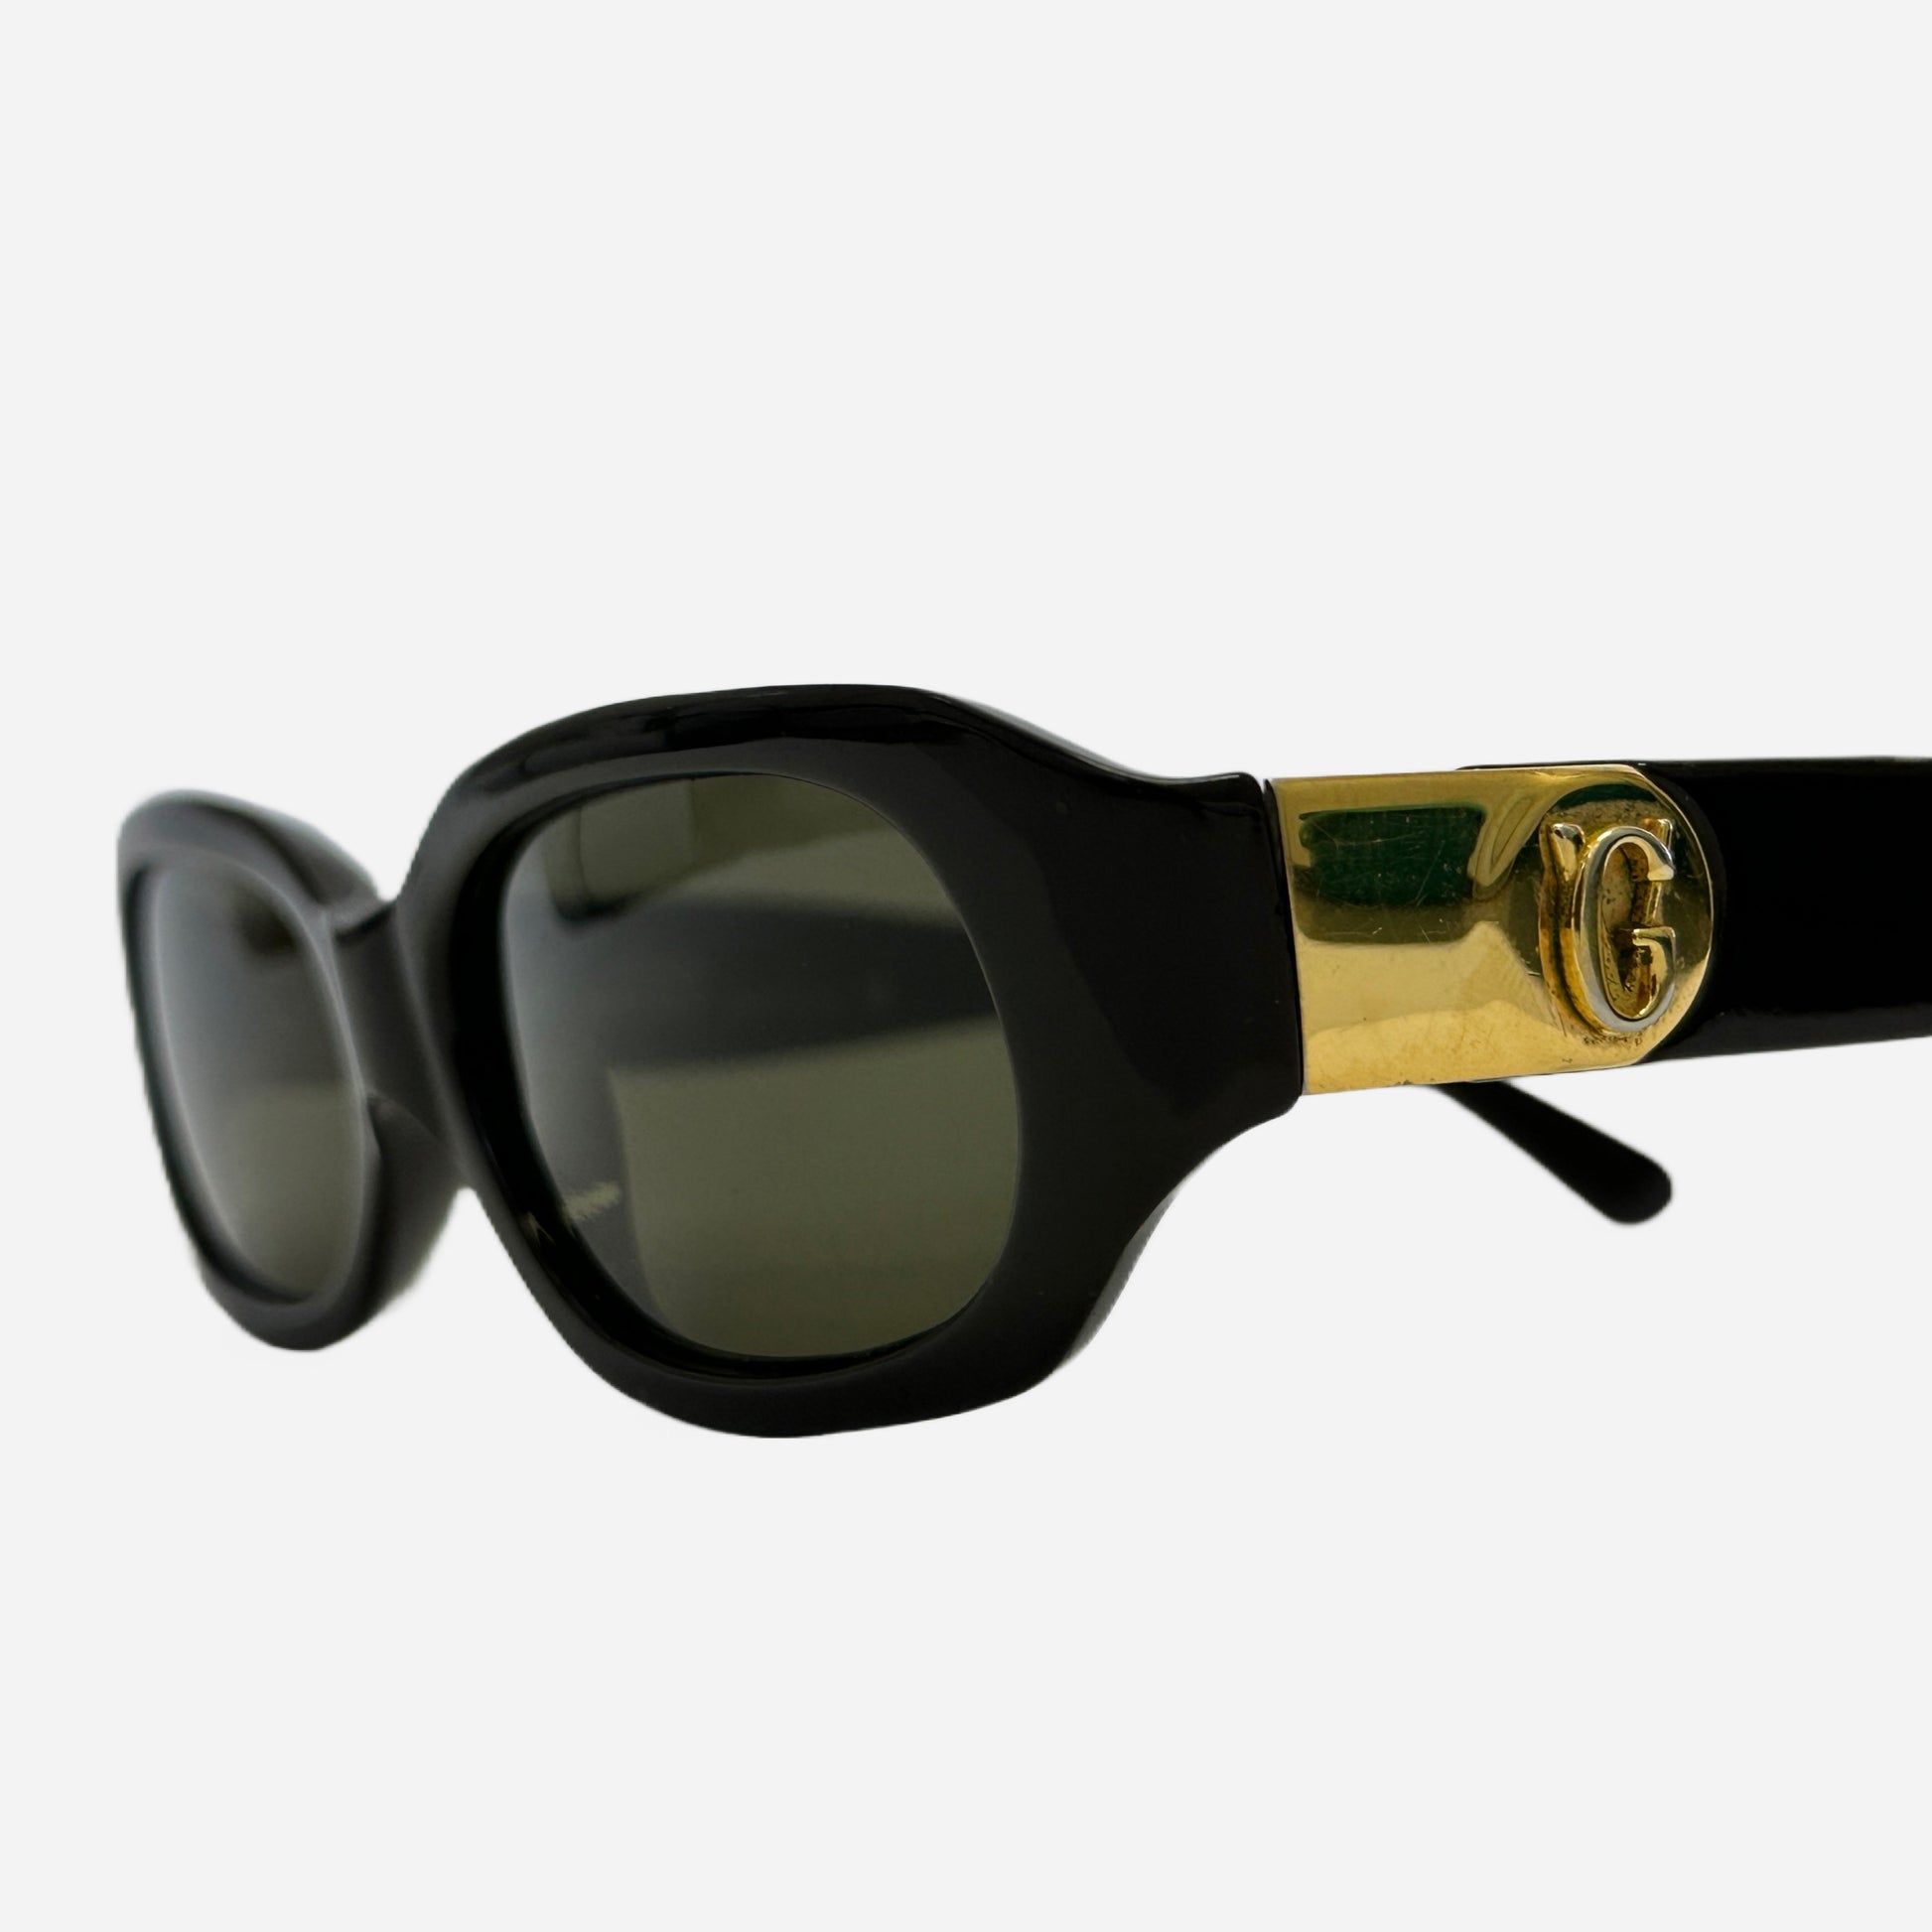 Vintage-Gianni-Versace-Sonnenbrille-Sunglasses-531-the-seekers-medusa-side-detail